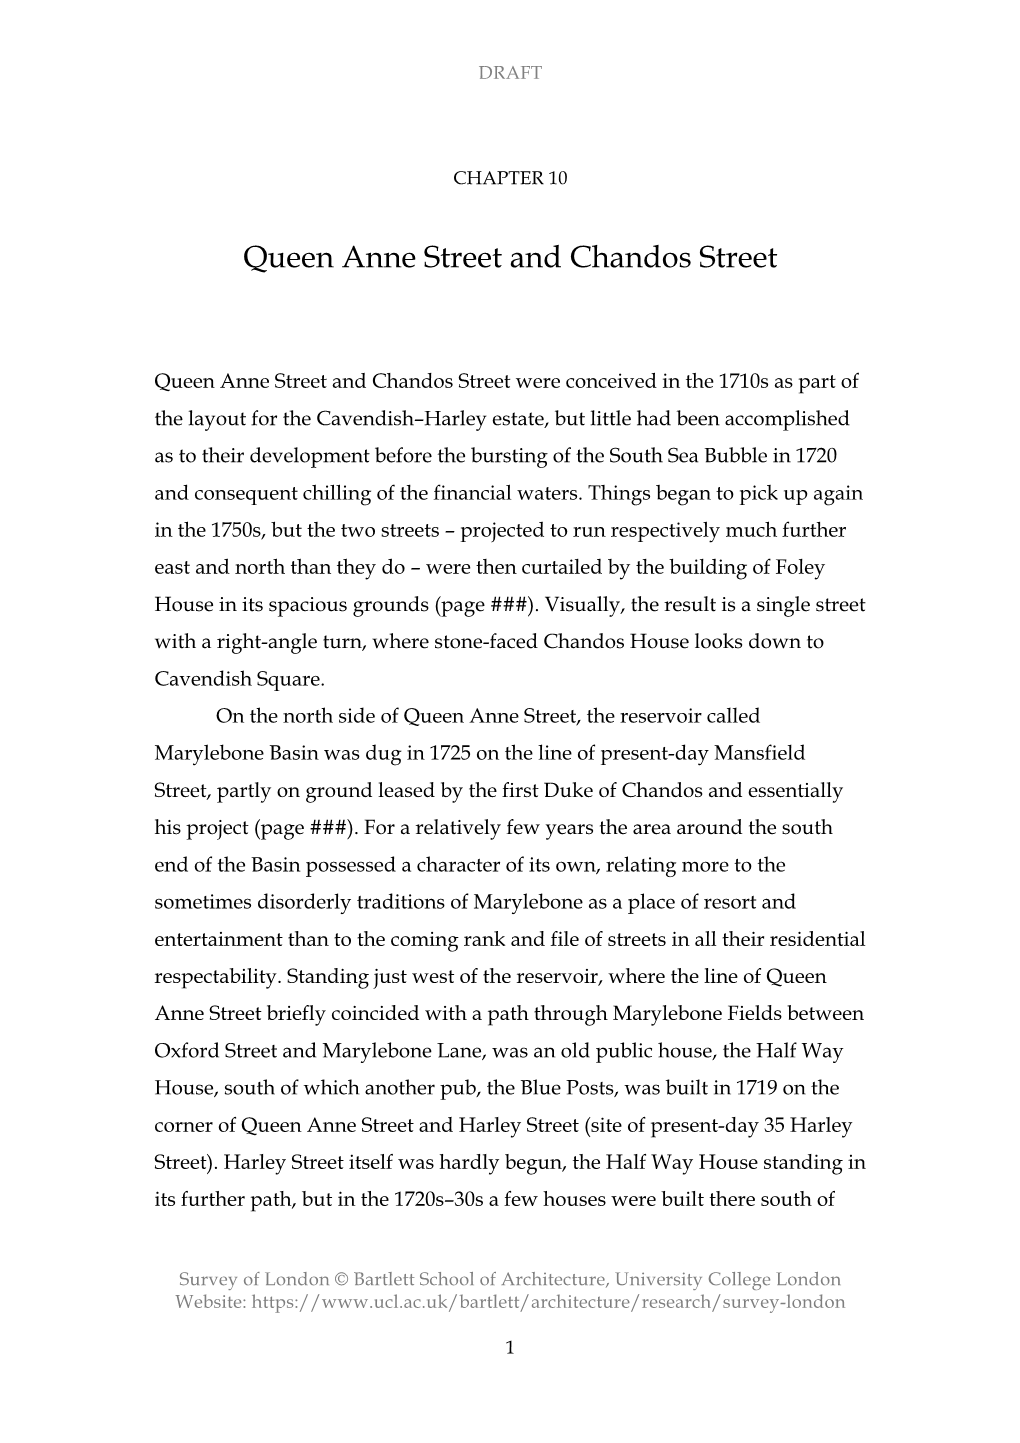 Queen Anne Street and Chandos Street